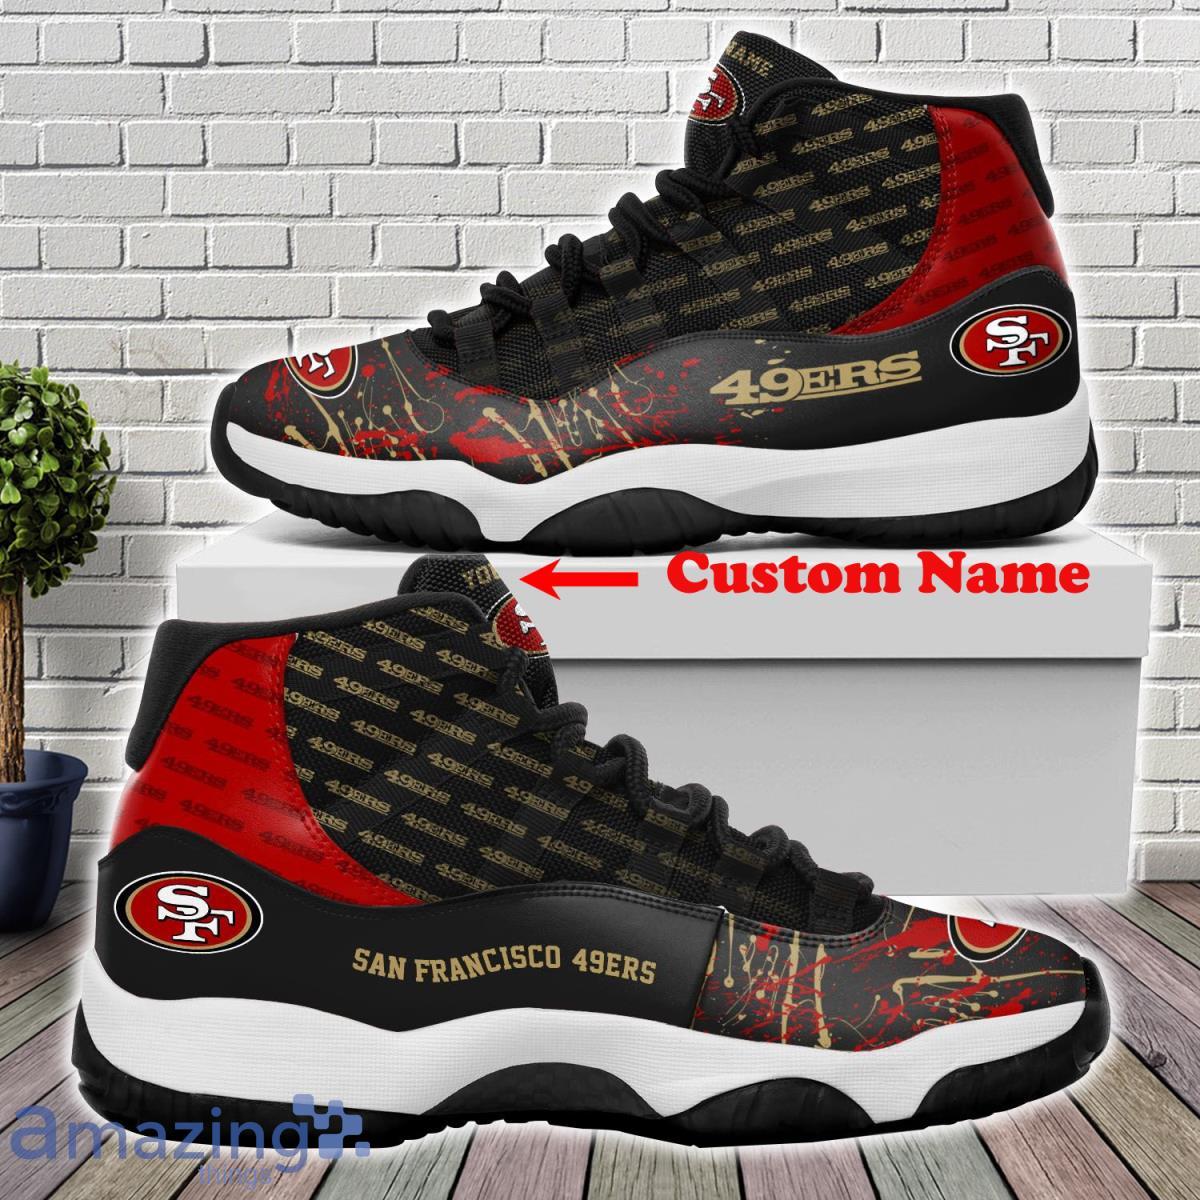 San Francisco 49ers Football Team Air Jordan 11 Custom Name Sneakers For Fans Product Photo 1